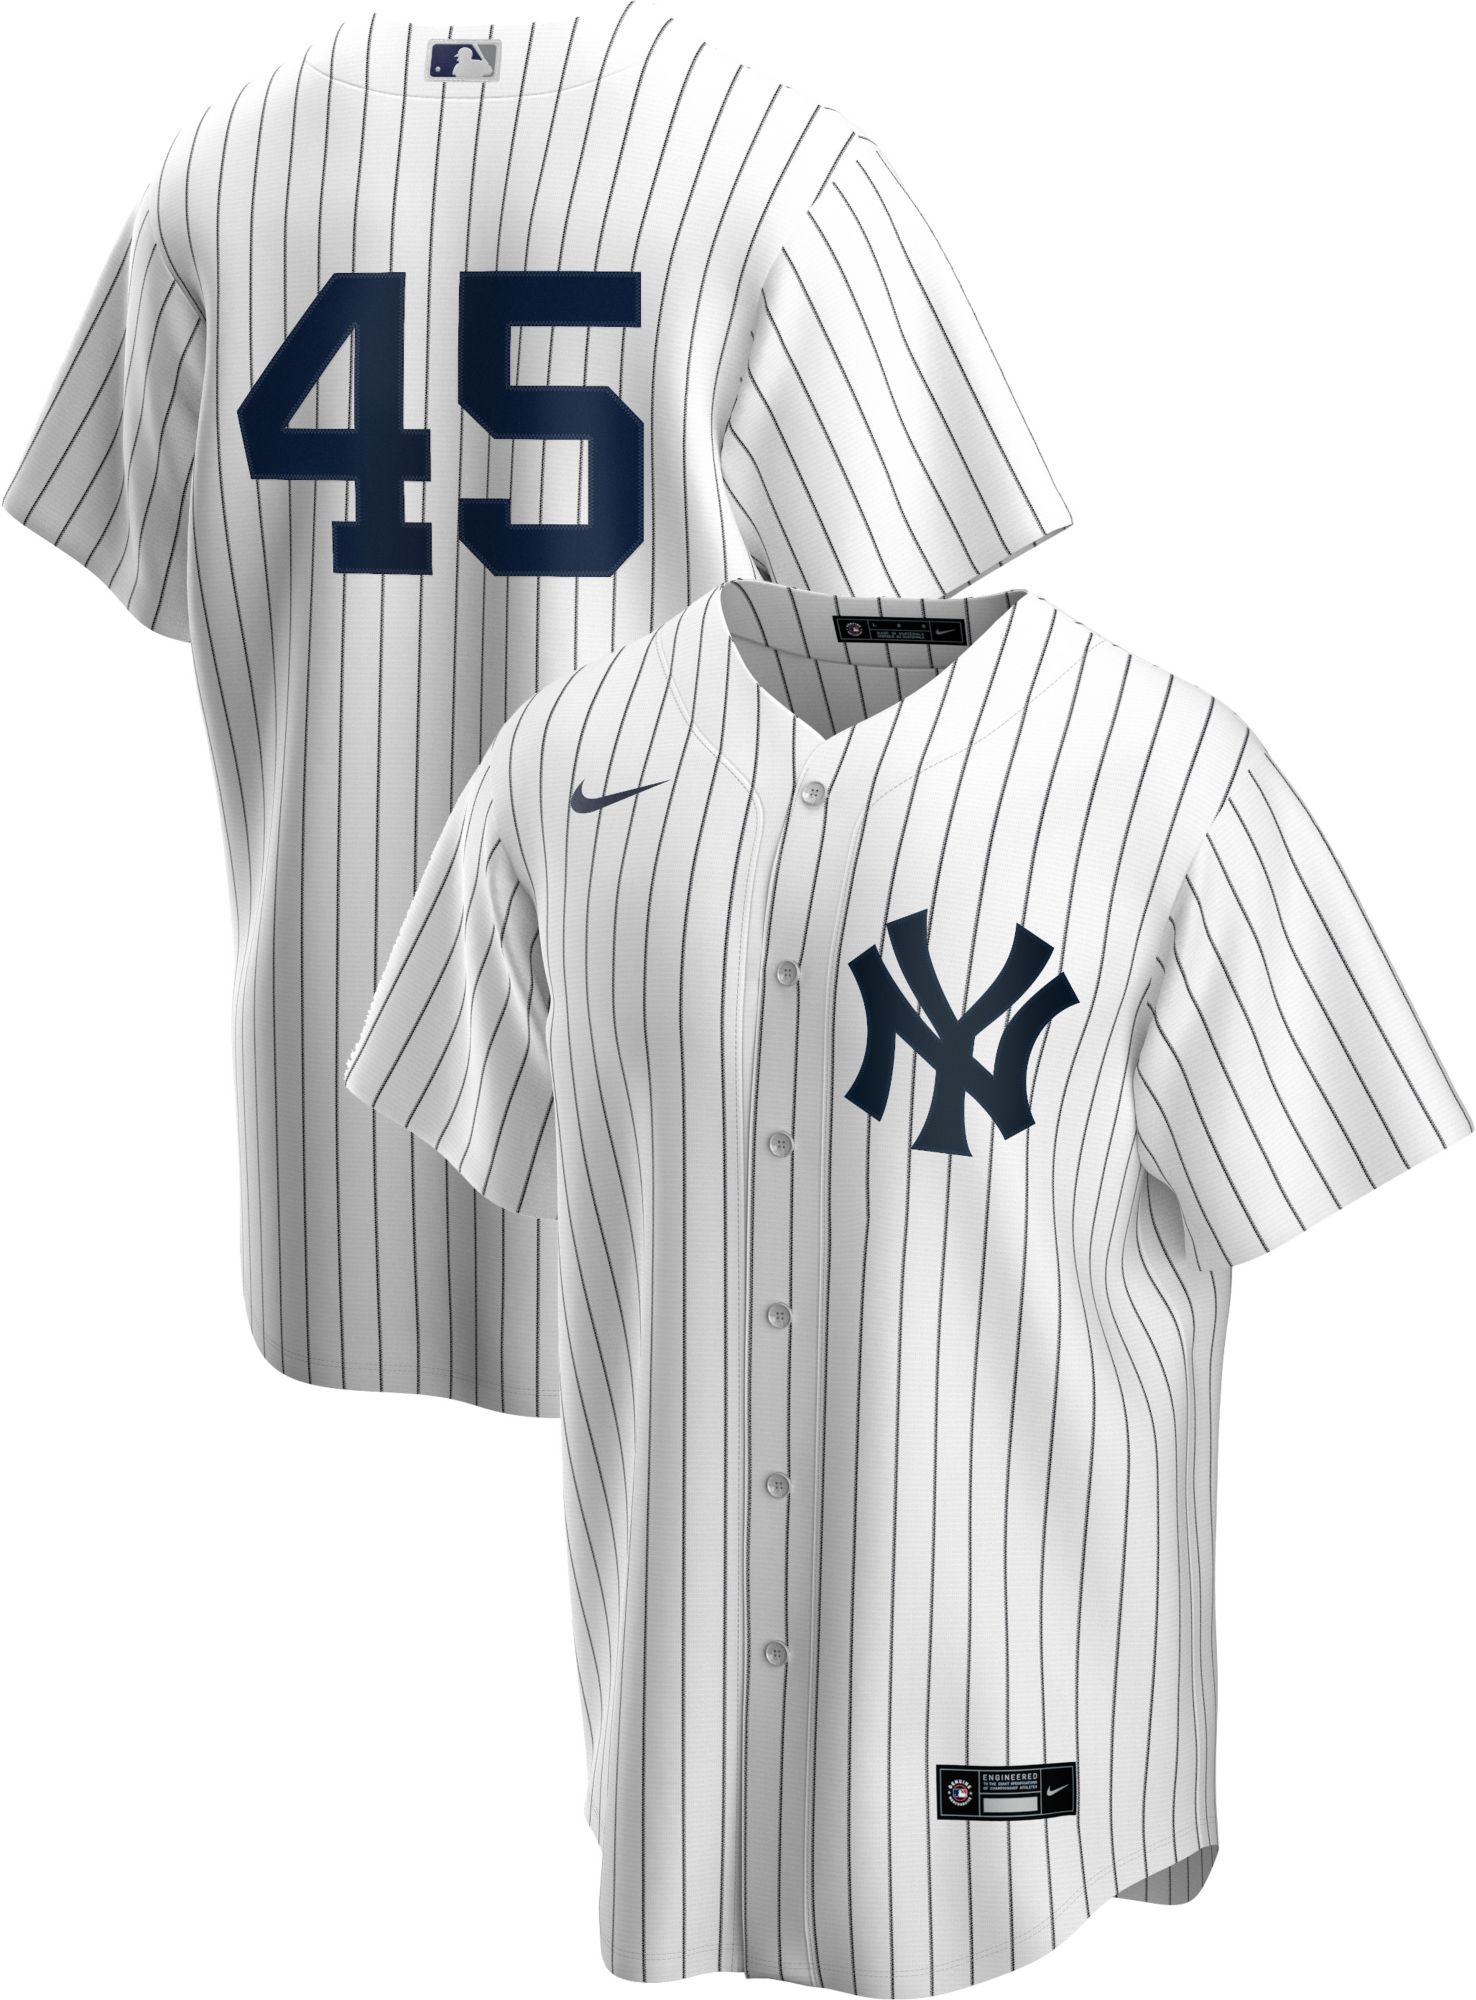 Yankees 99 Aaron Judge Charcoal Nike 2022 MLB All Star Cool Base Jerseys